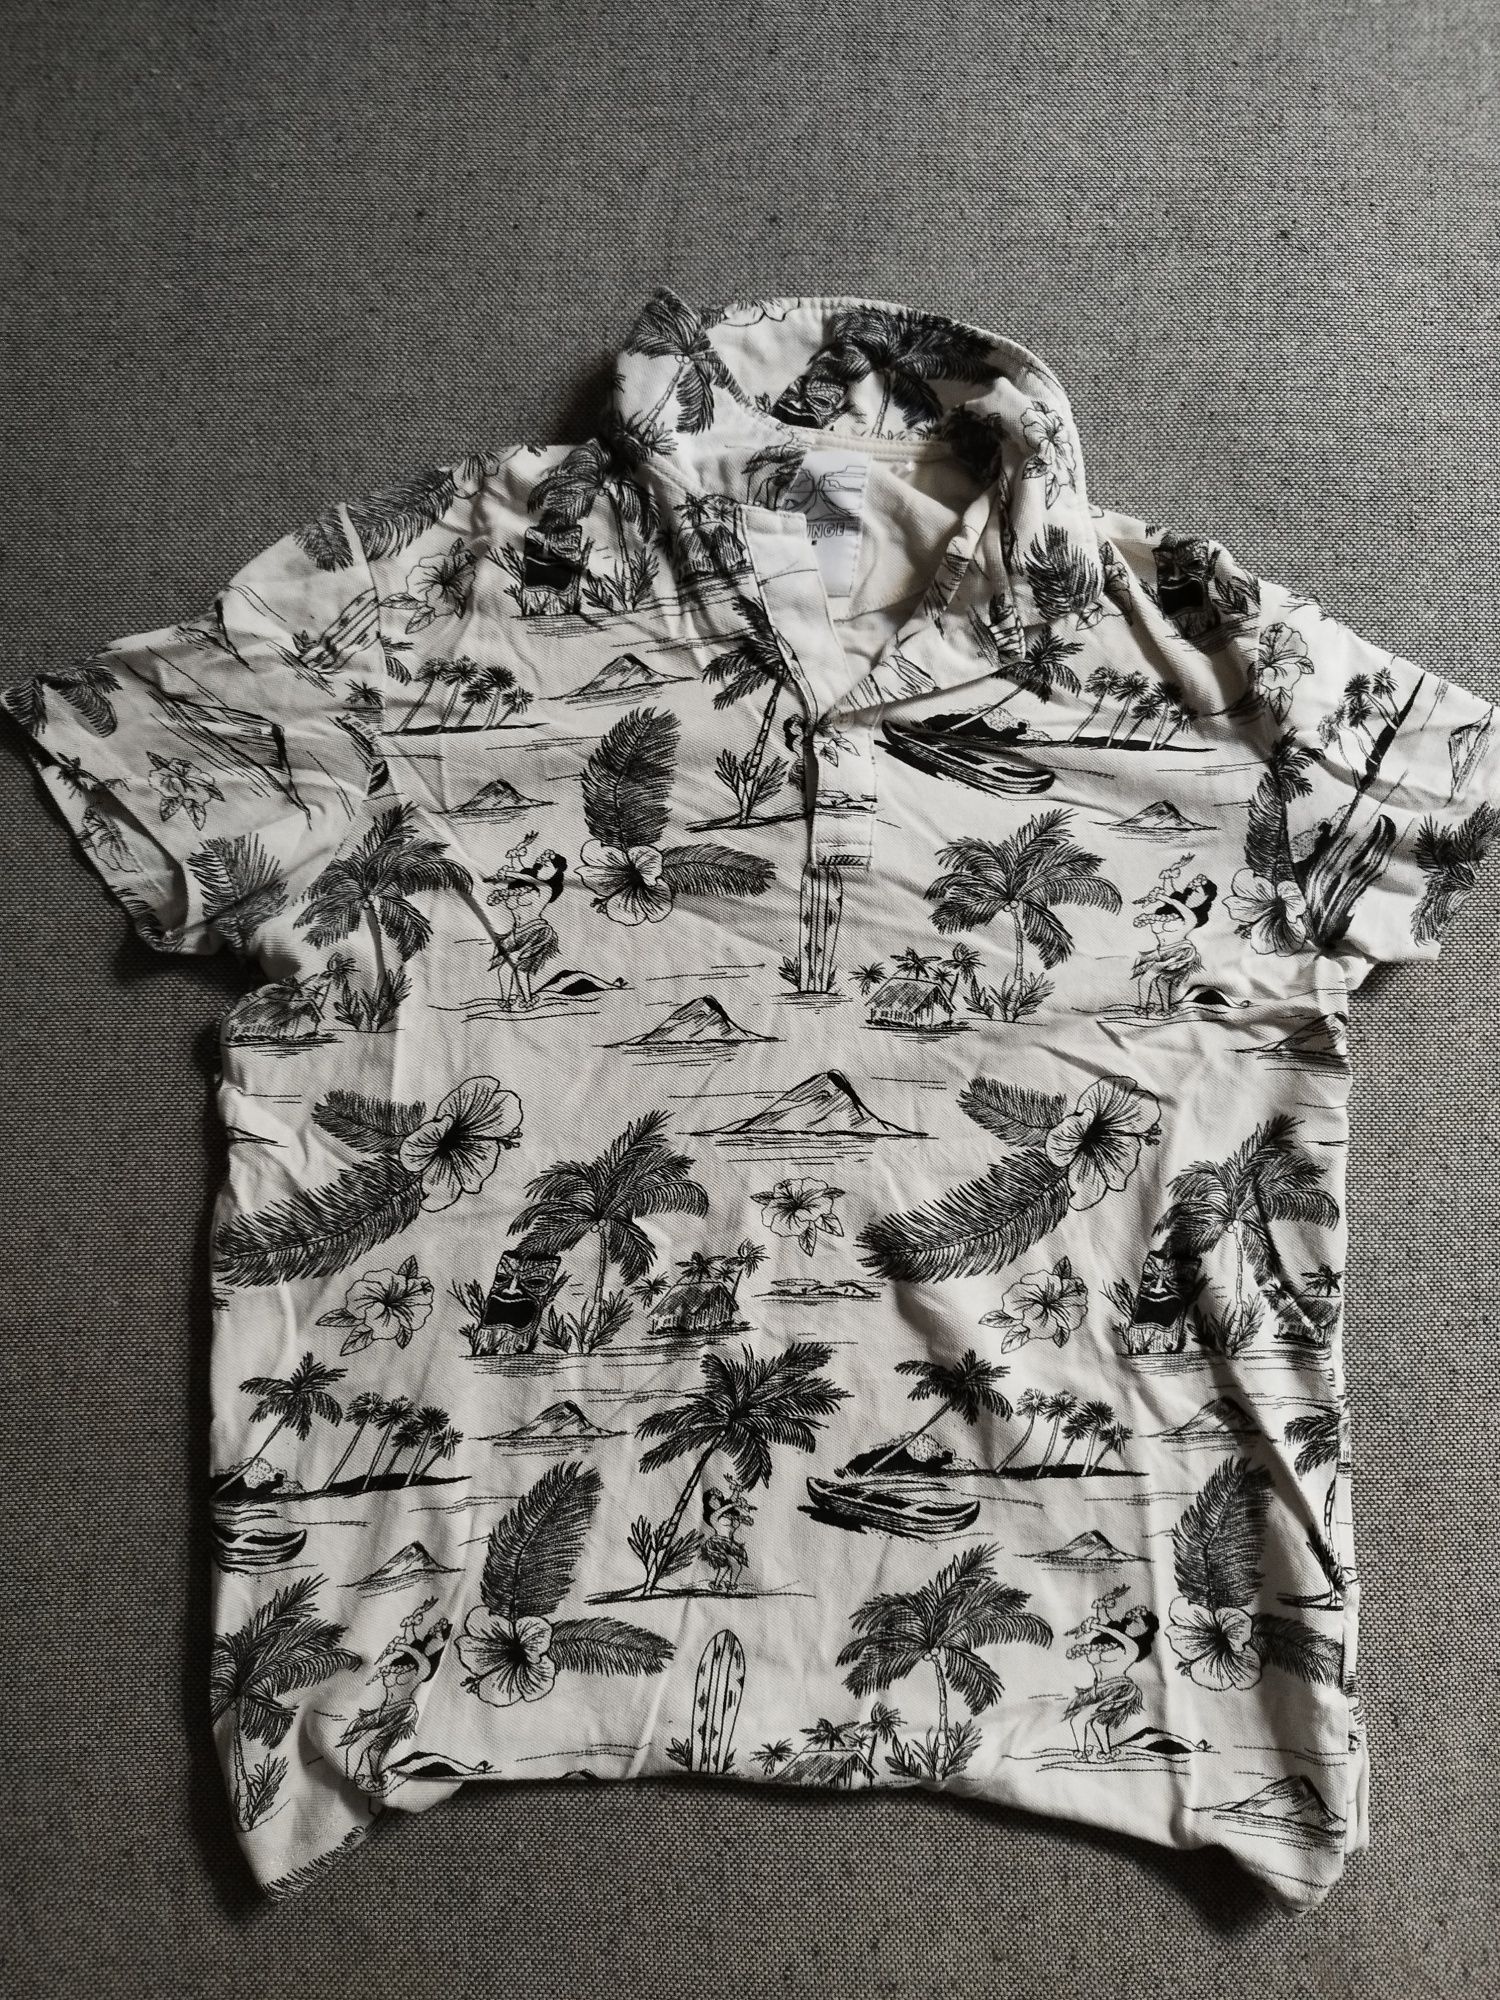 Koszulki, bluza + 1 gratis rozmiar L